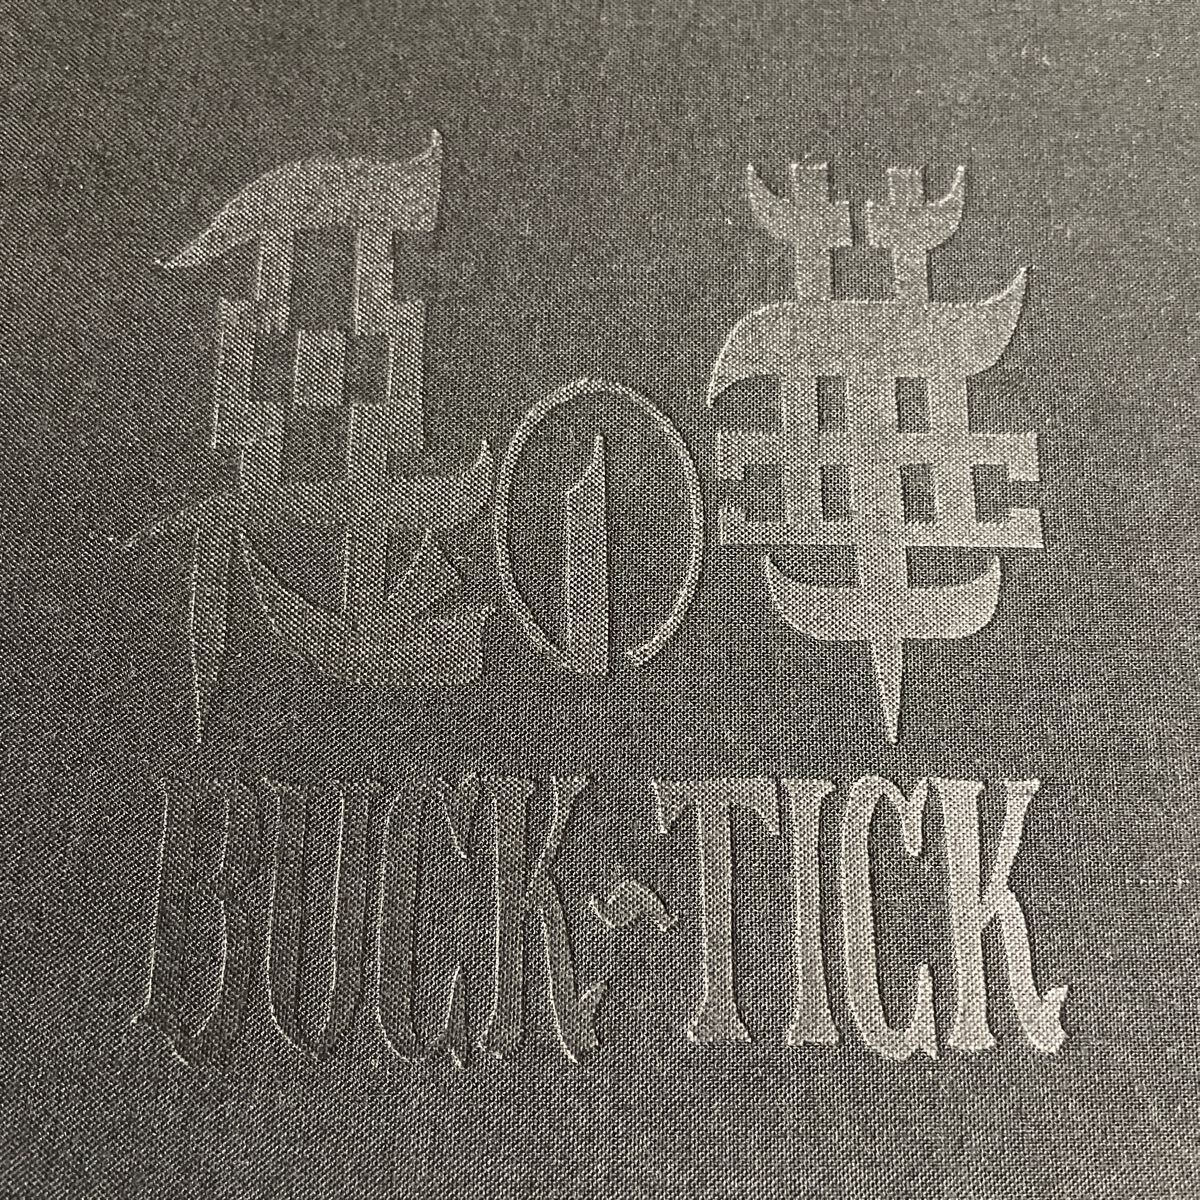 BUCK-TICK 惡の華 写真集 バクチク ツアーパンフレットの画像5